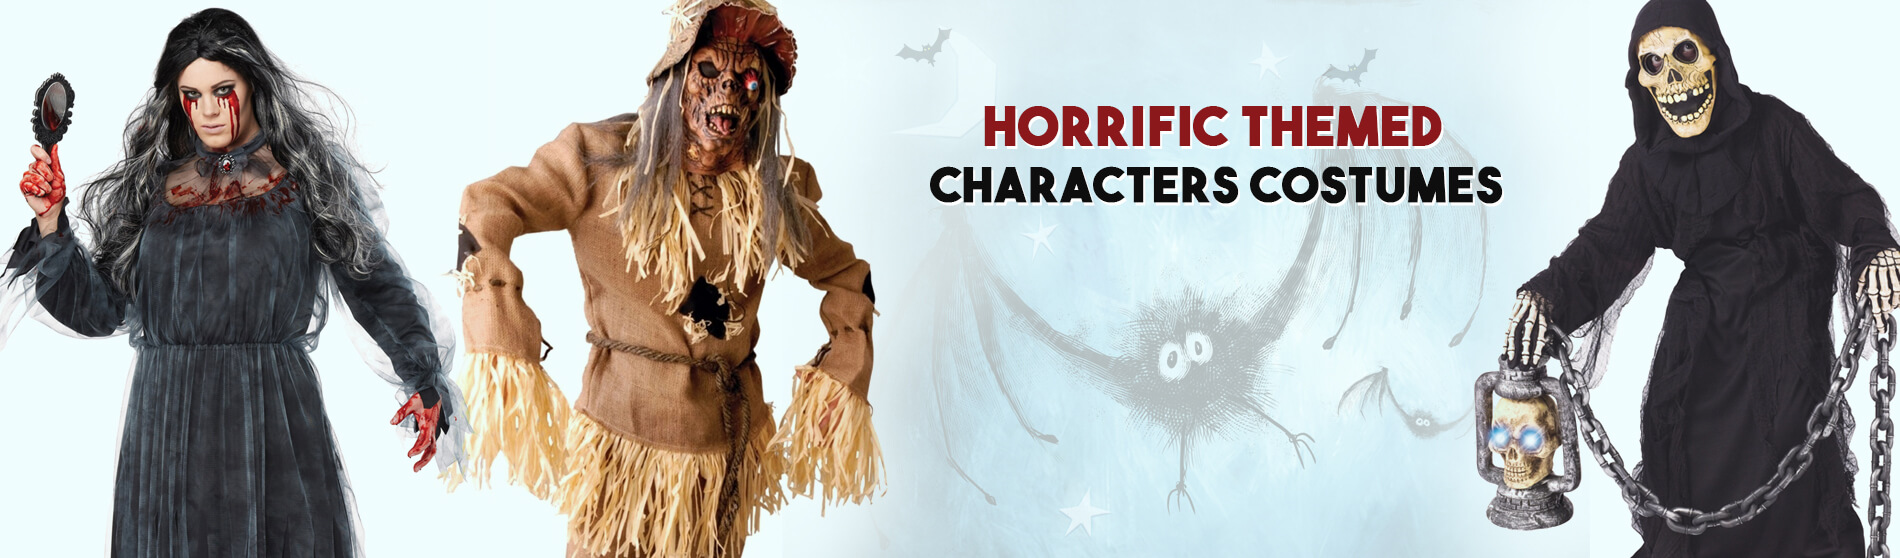 Glendale Halloween : Horrific Themed Characters